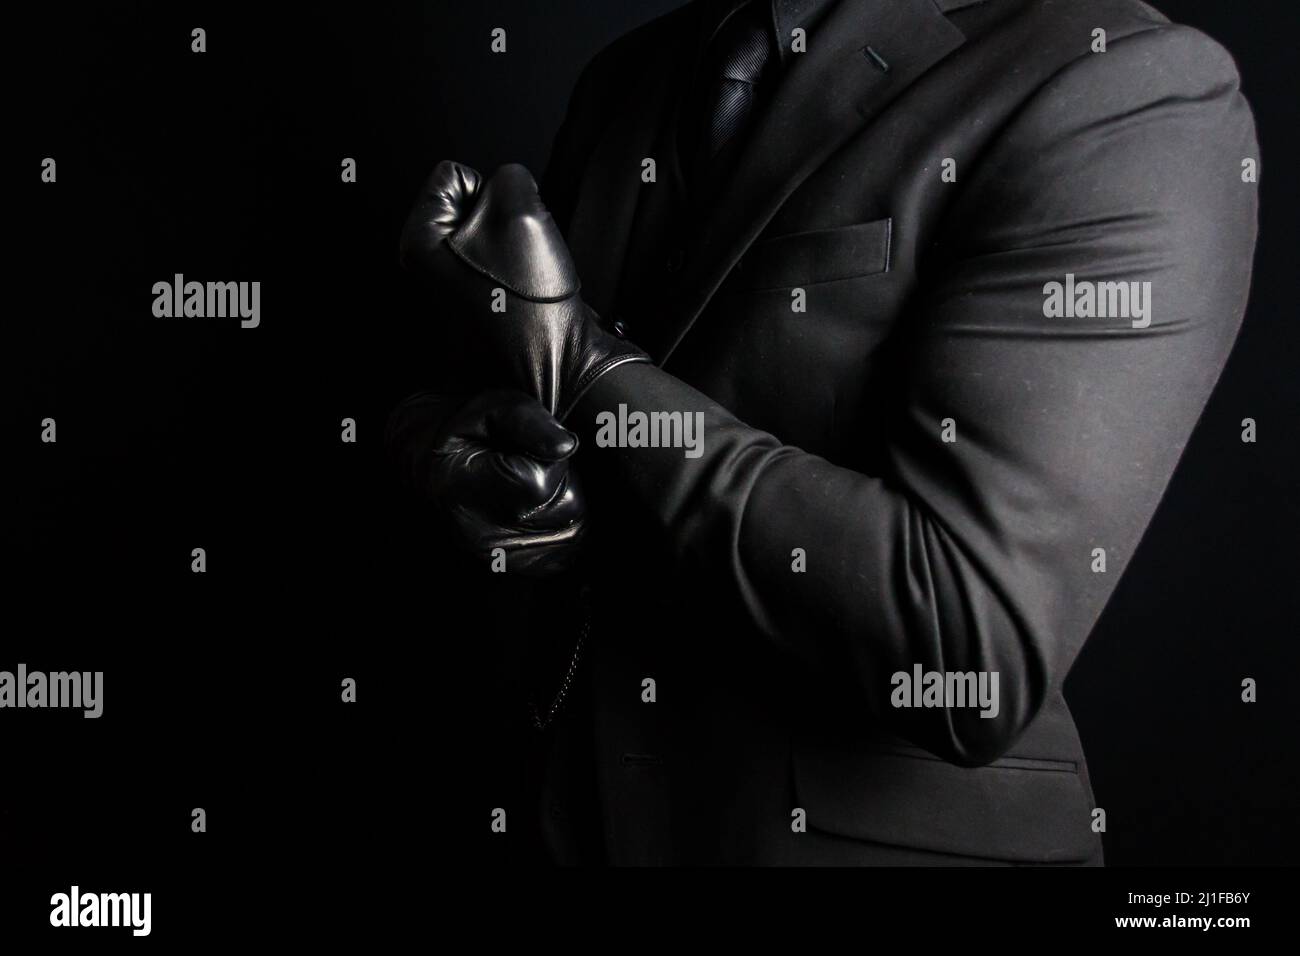 Portrait of Man in Dark Suit Pulling on Black Leather Gloves. Mafia Hitman Concept. Stock Photo